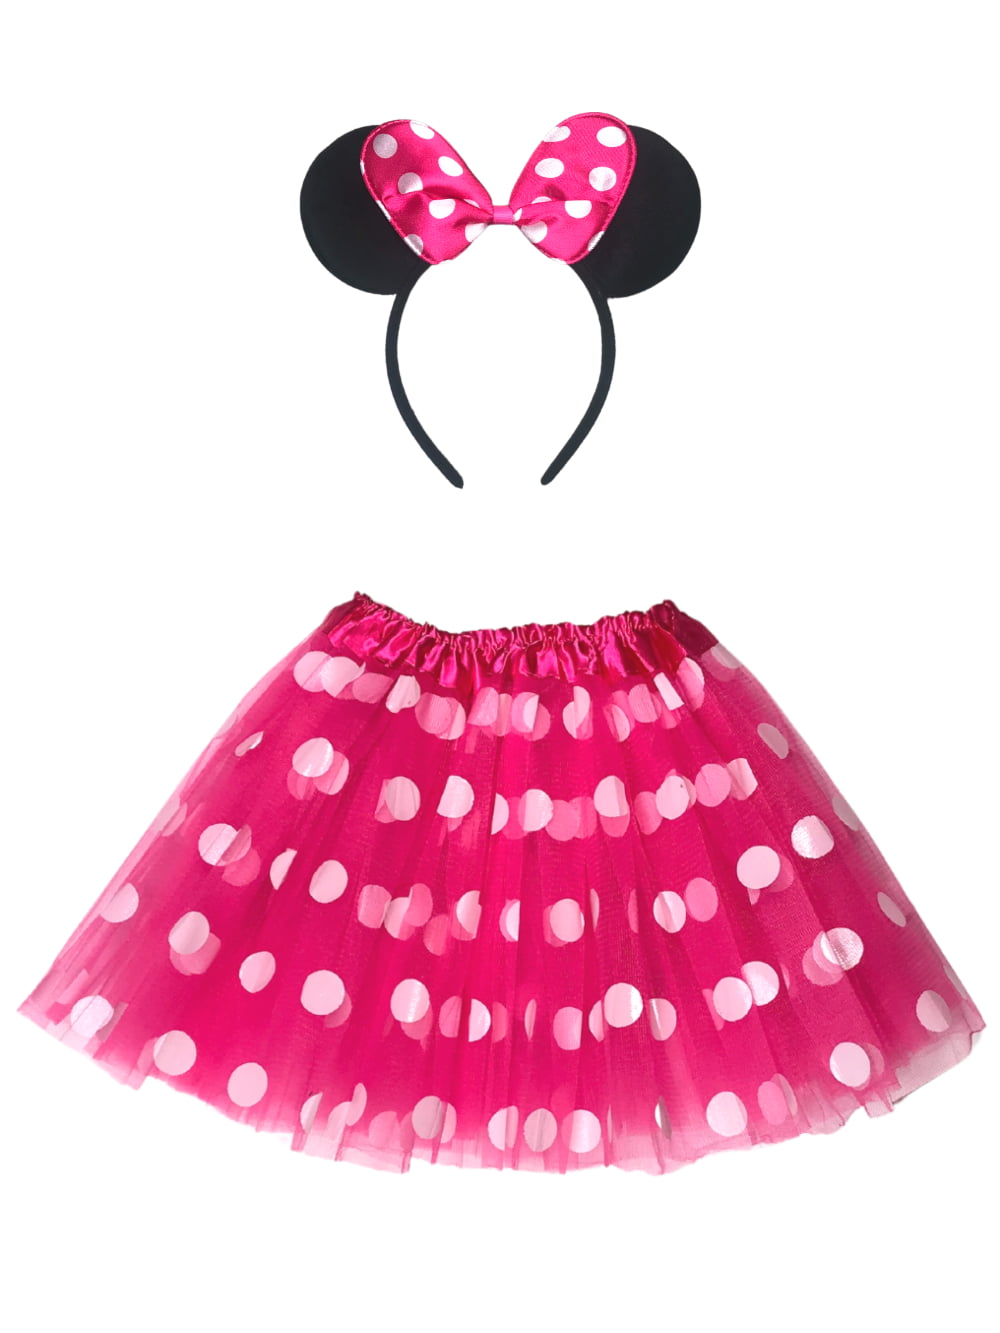 Girls Minnie Mouse Fancy Tutu Costume Polka Dot Dress Set Outfits Ear Headband 